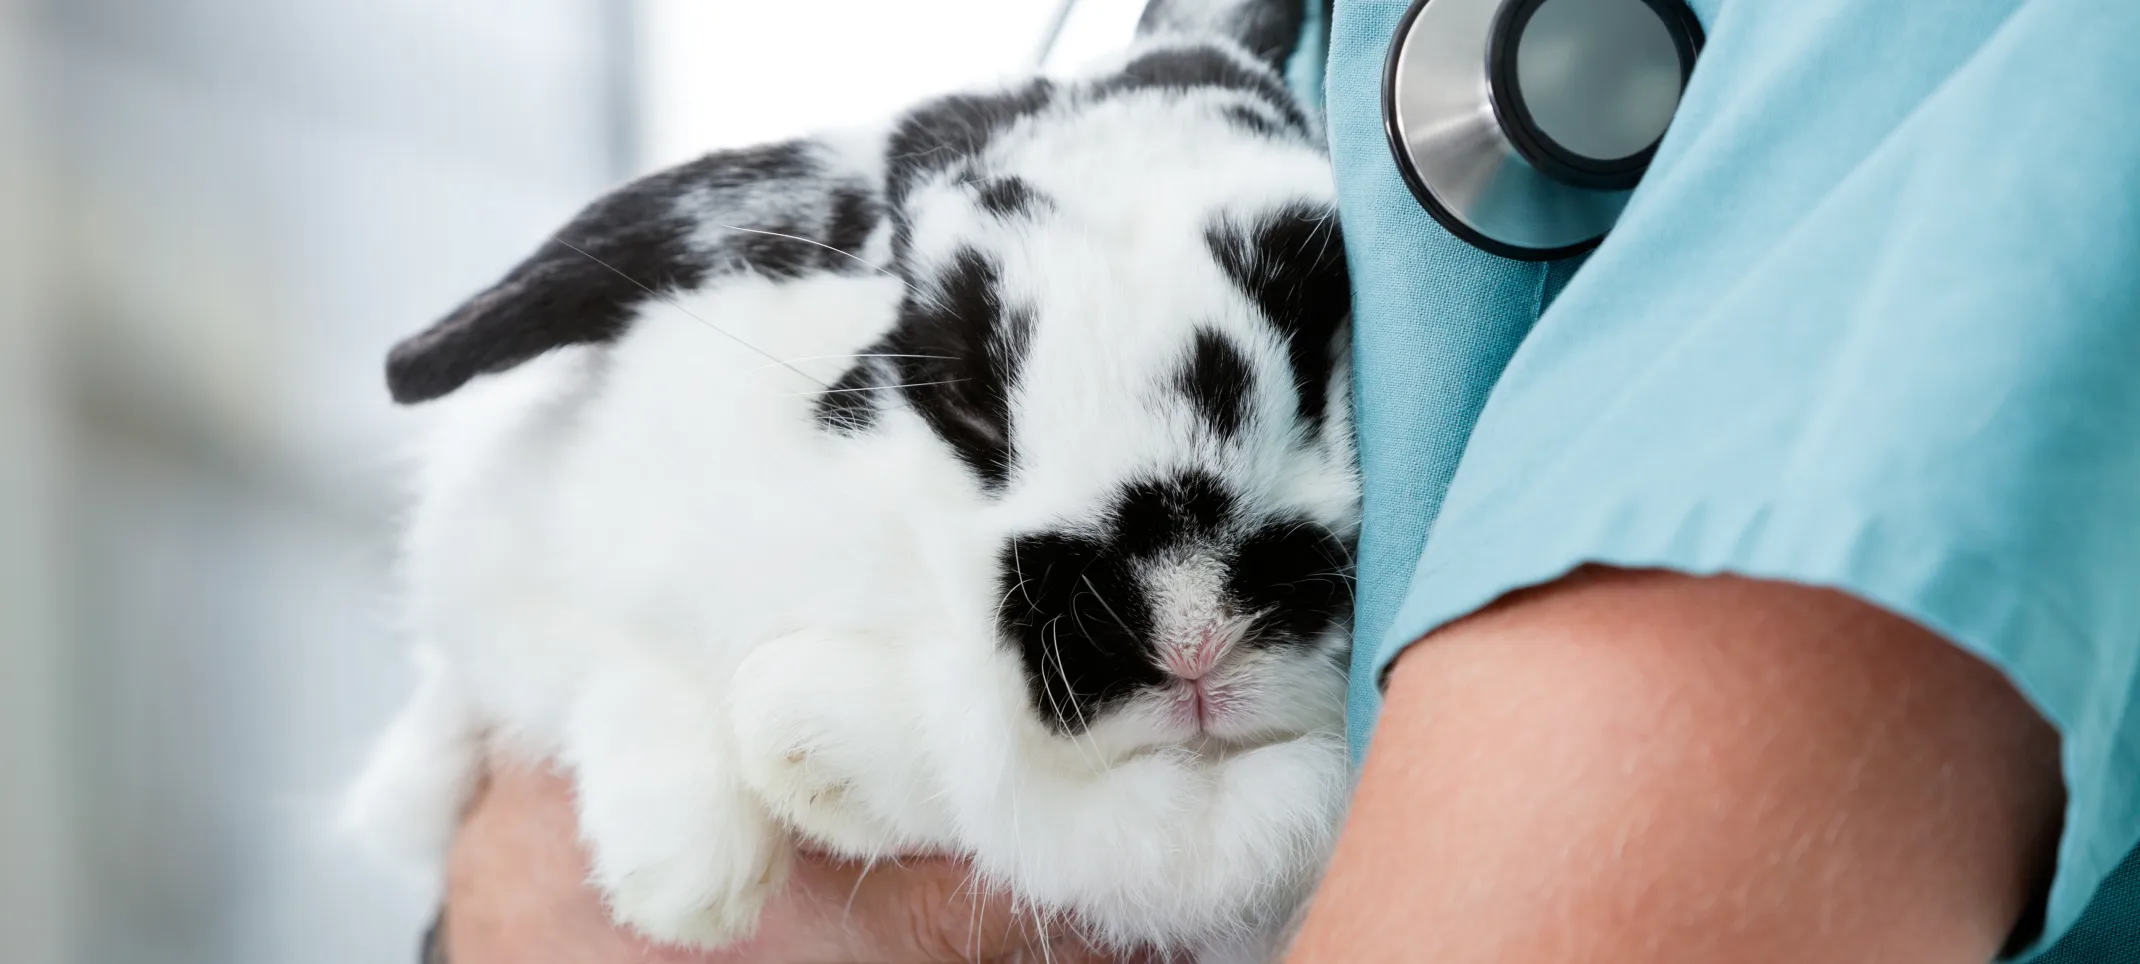 Veterinary staff member holding a rabbit